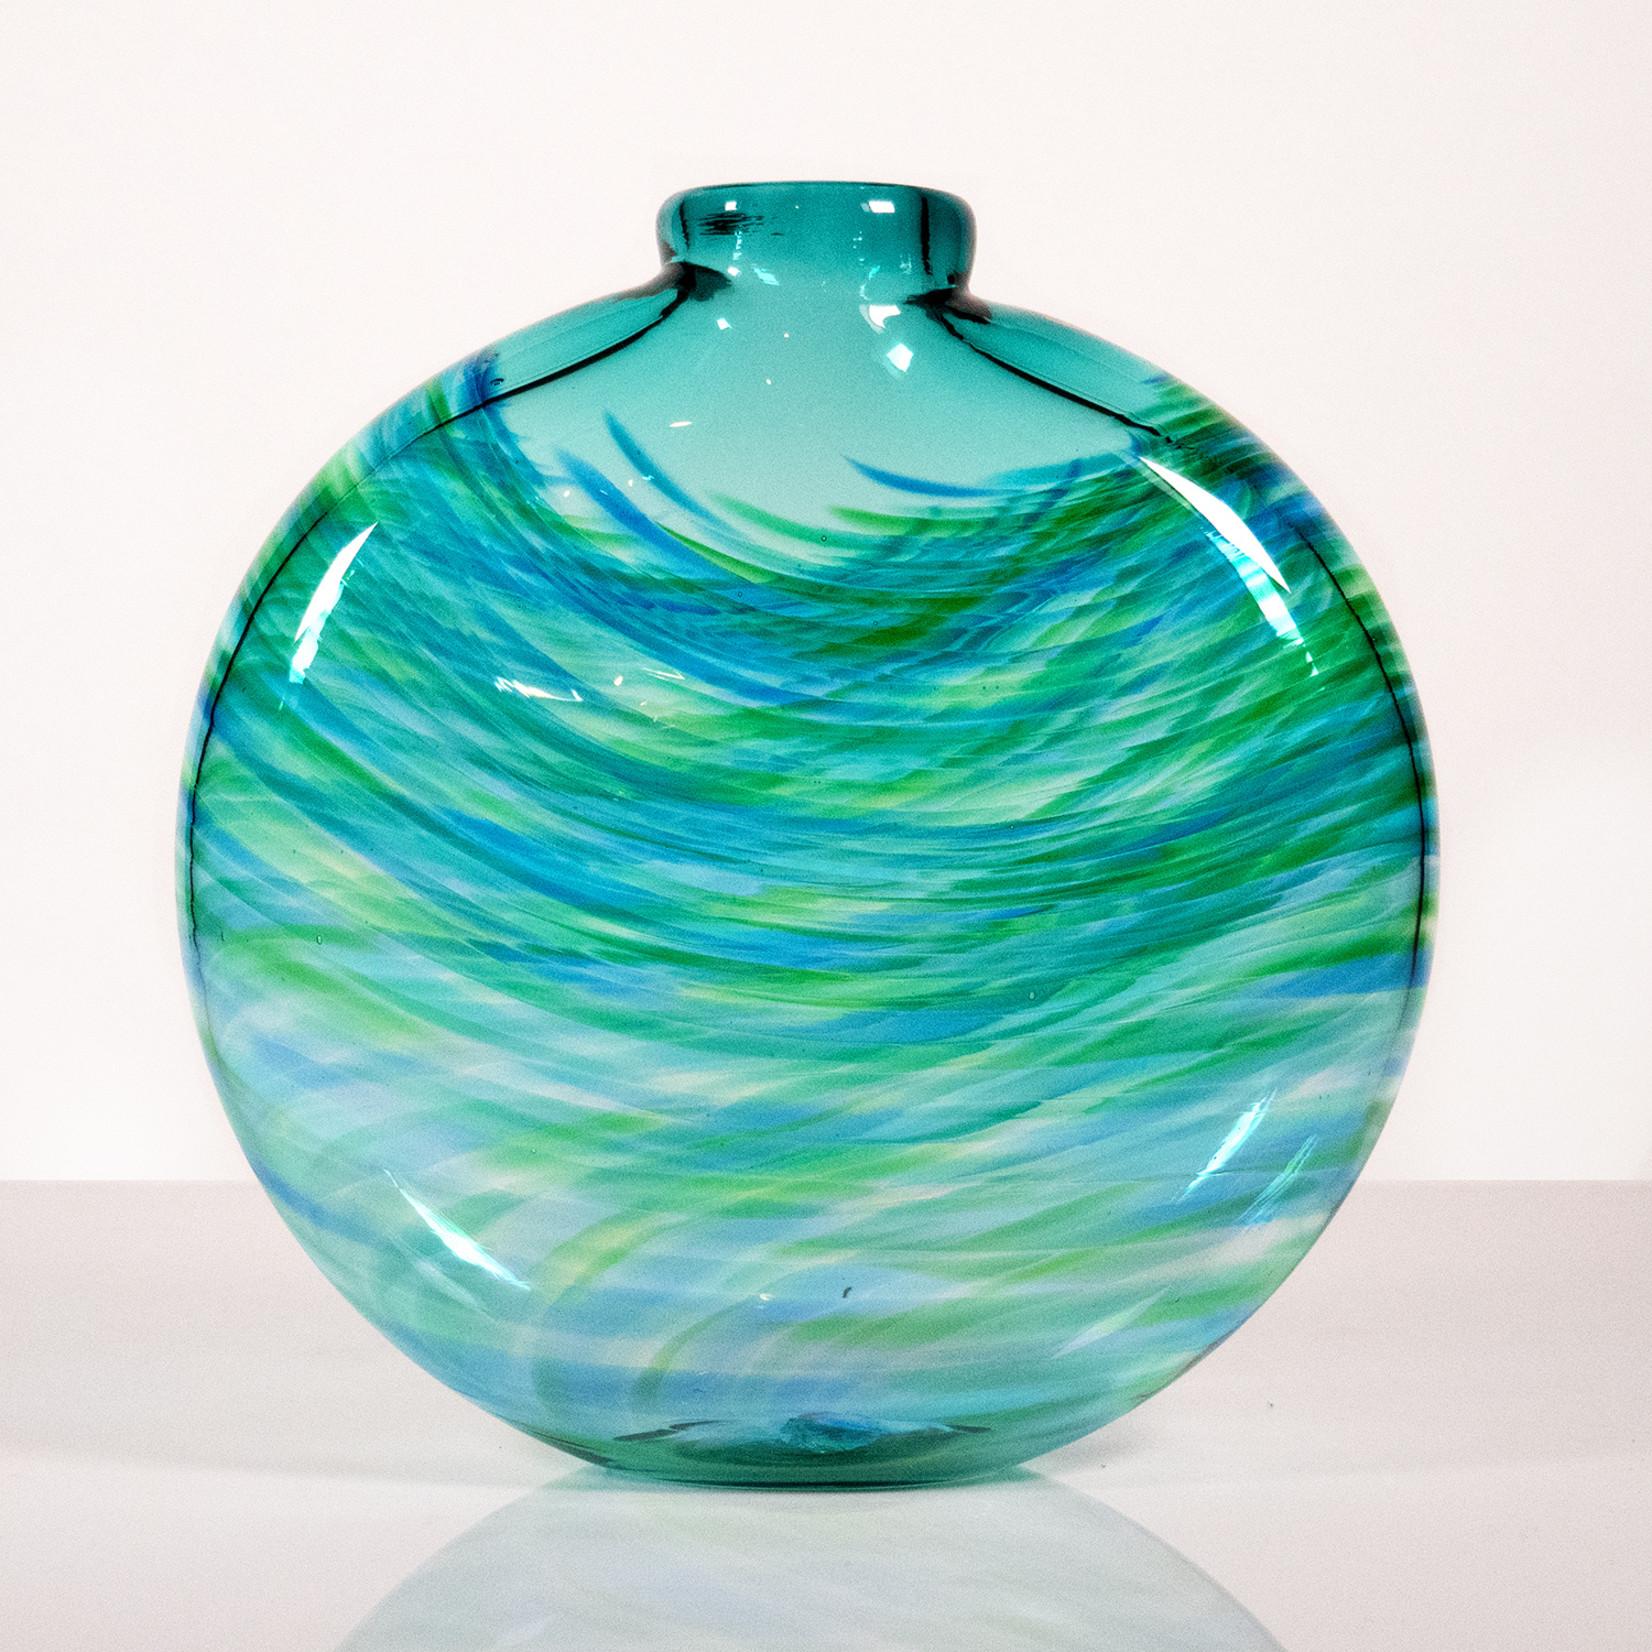 Little River Hot Glass: Vortex Flat Vase